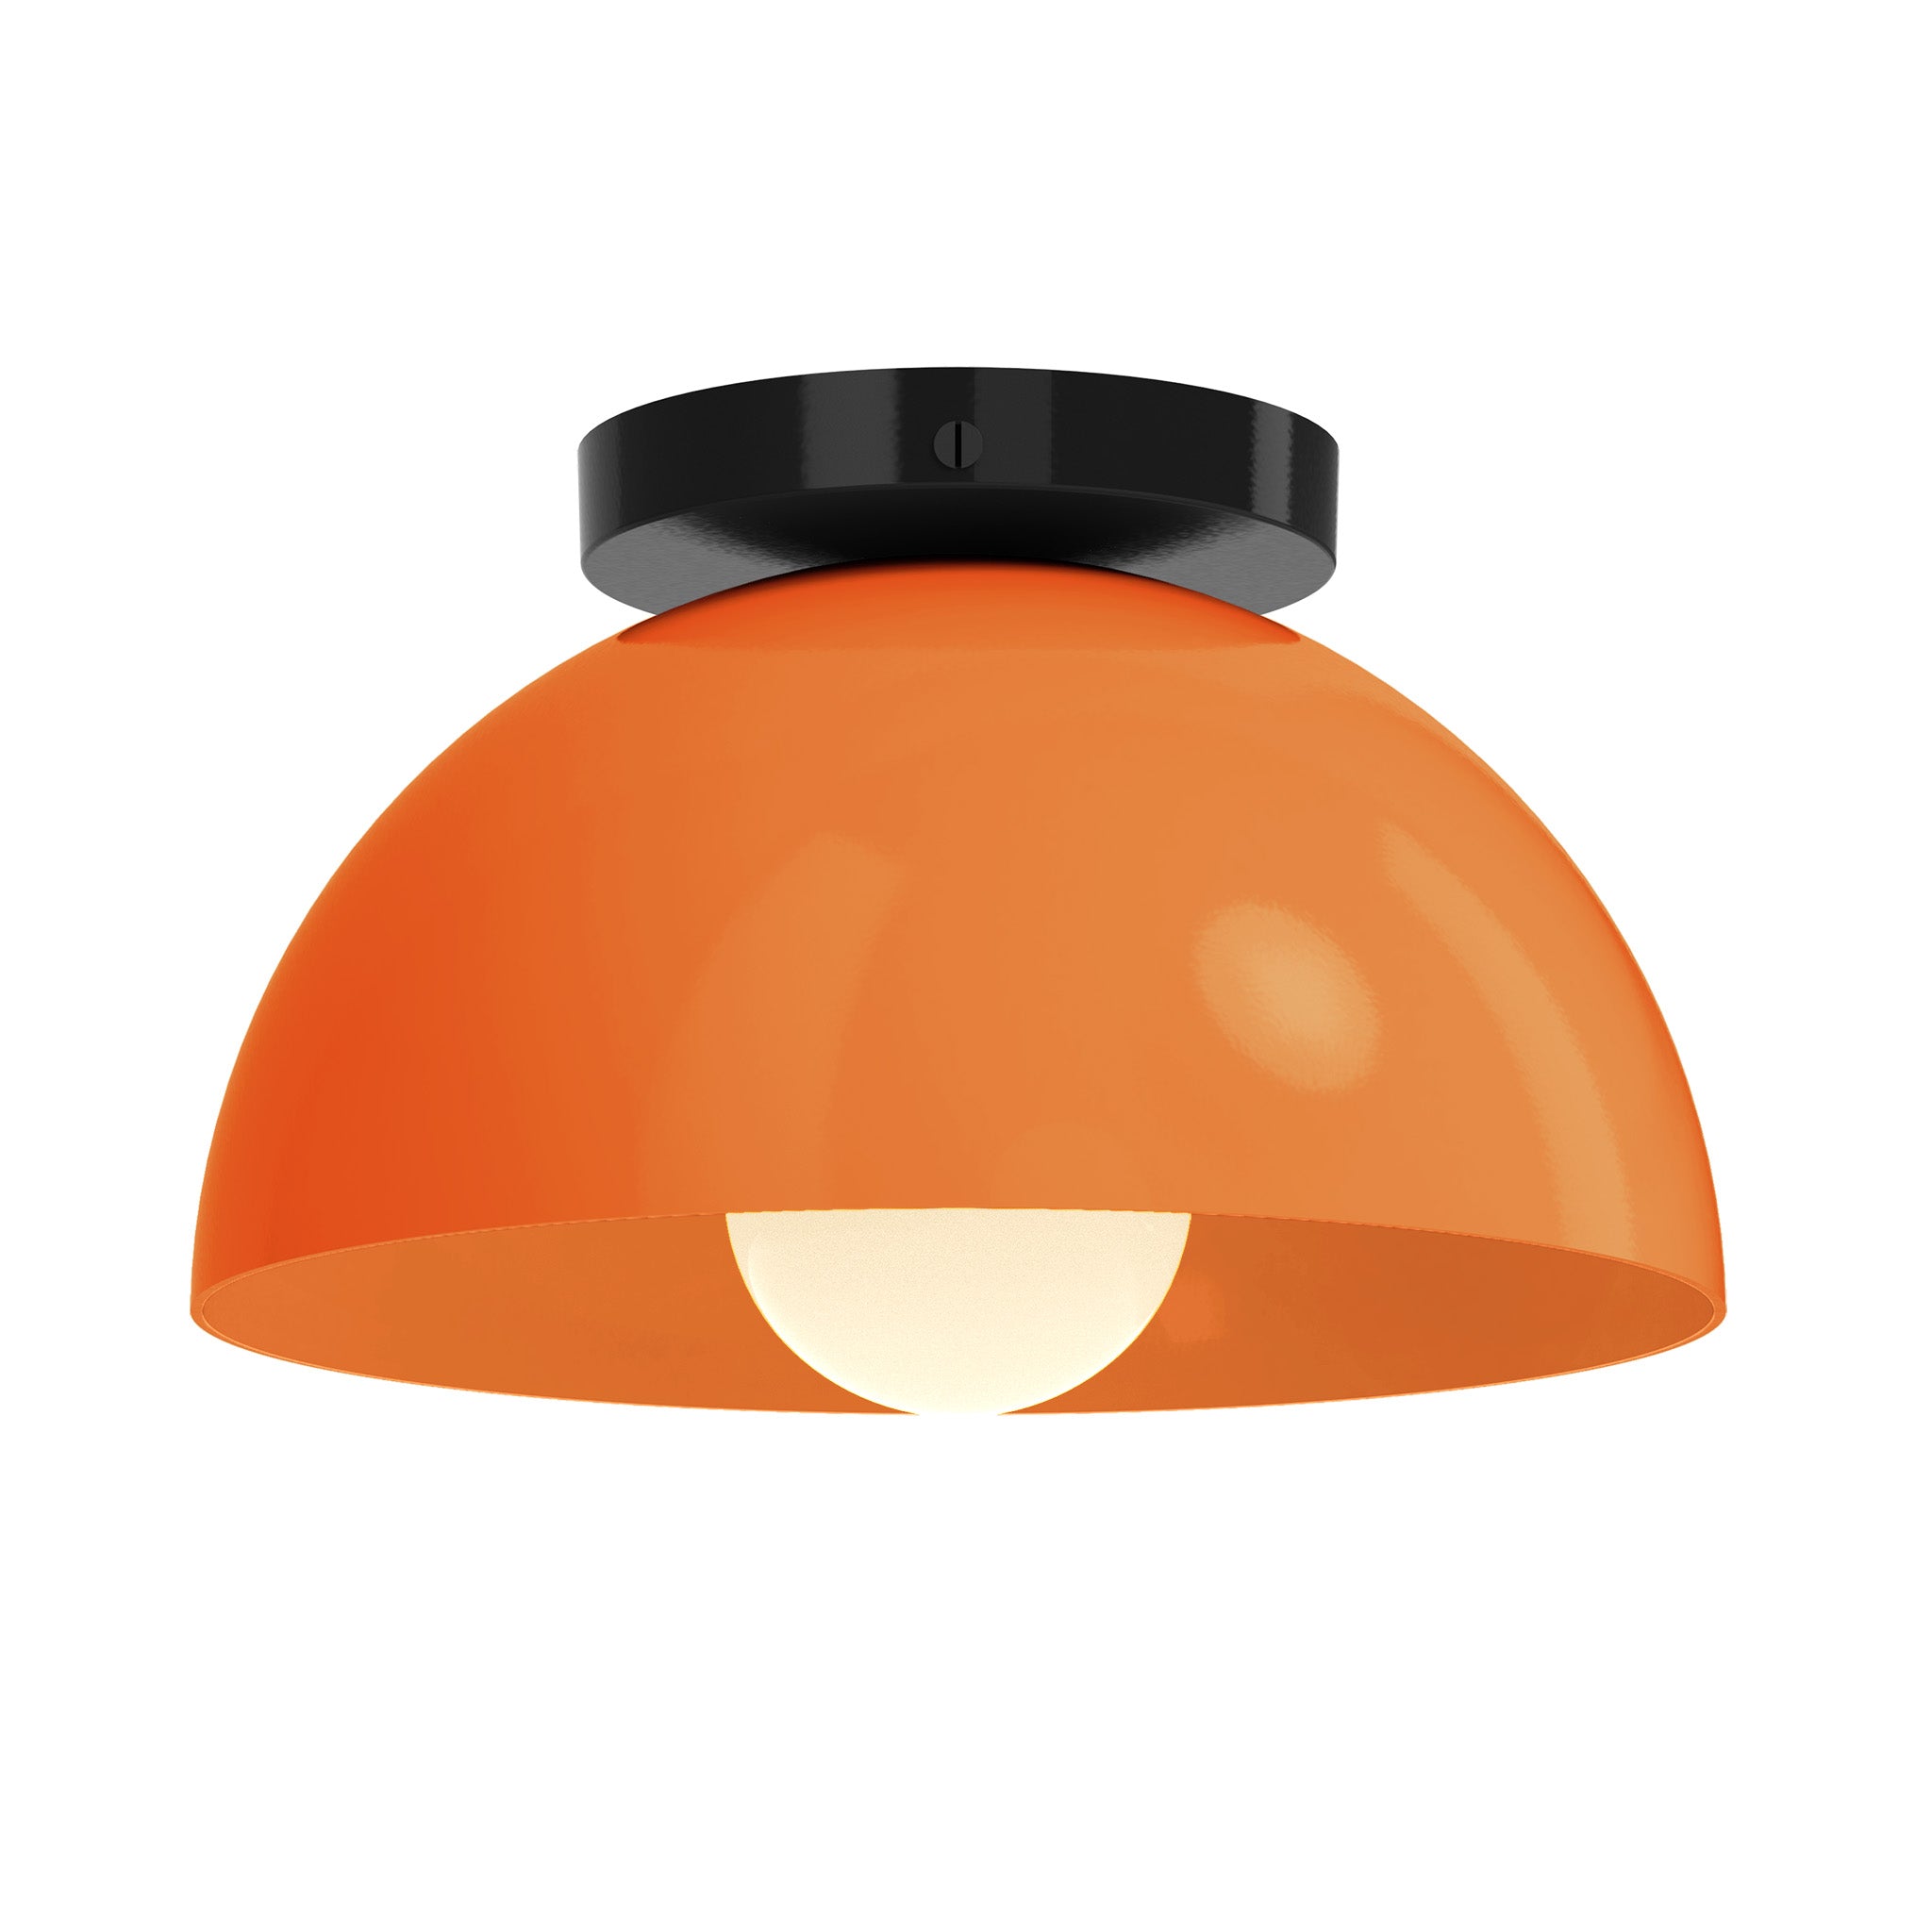 Black and orange color Hemi flush mount 10" Dutton Brown lighting